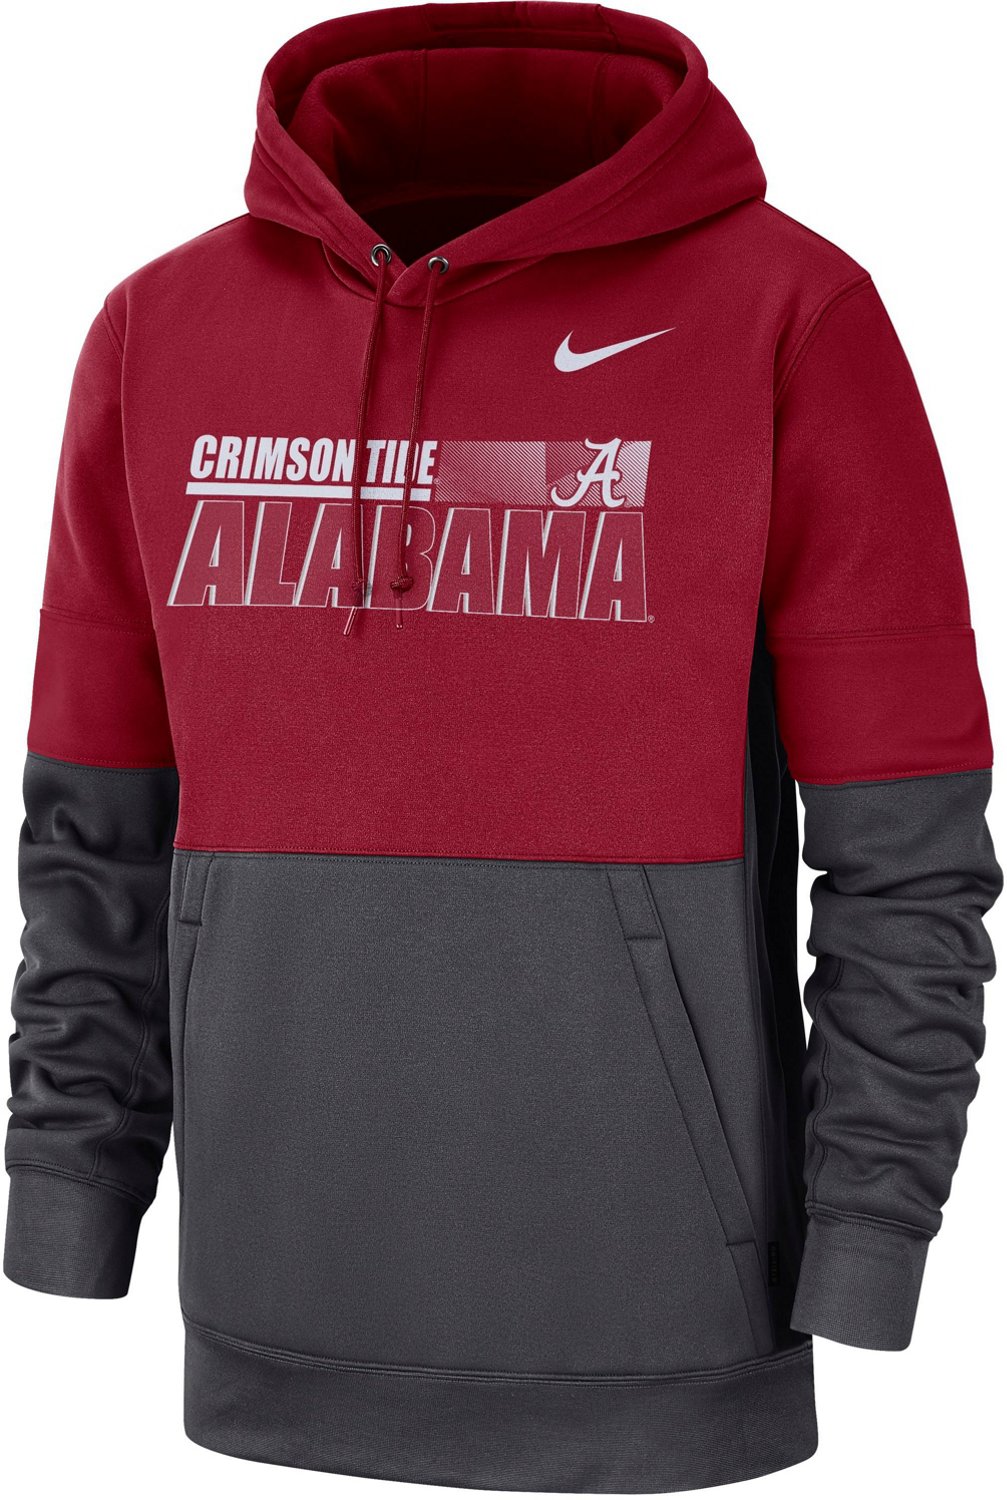 Nike Men's University of Alabama Therma Pullover Hoodie | Academy